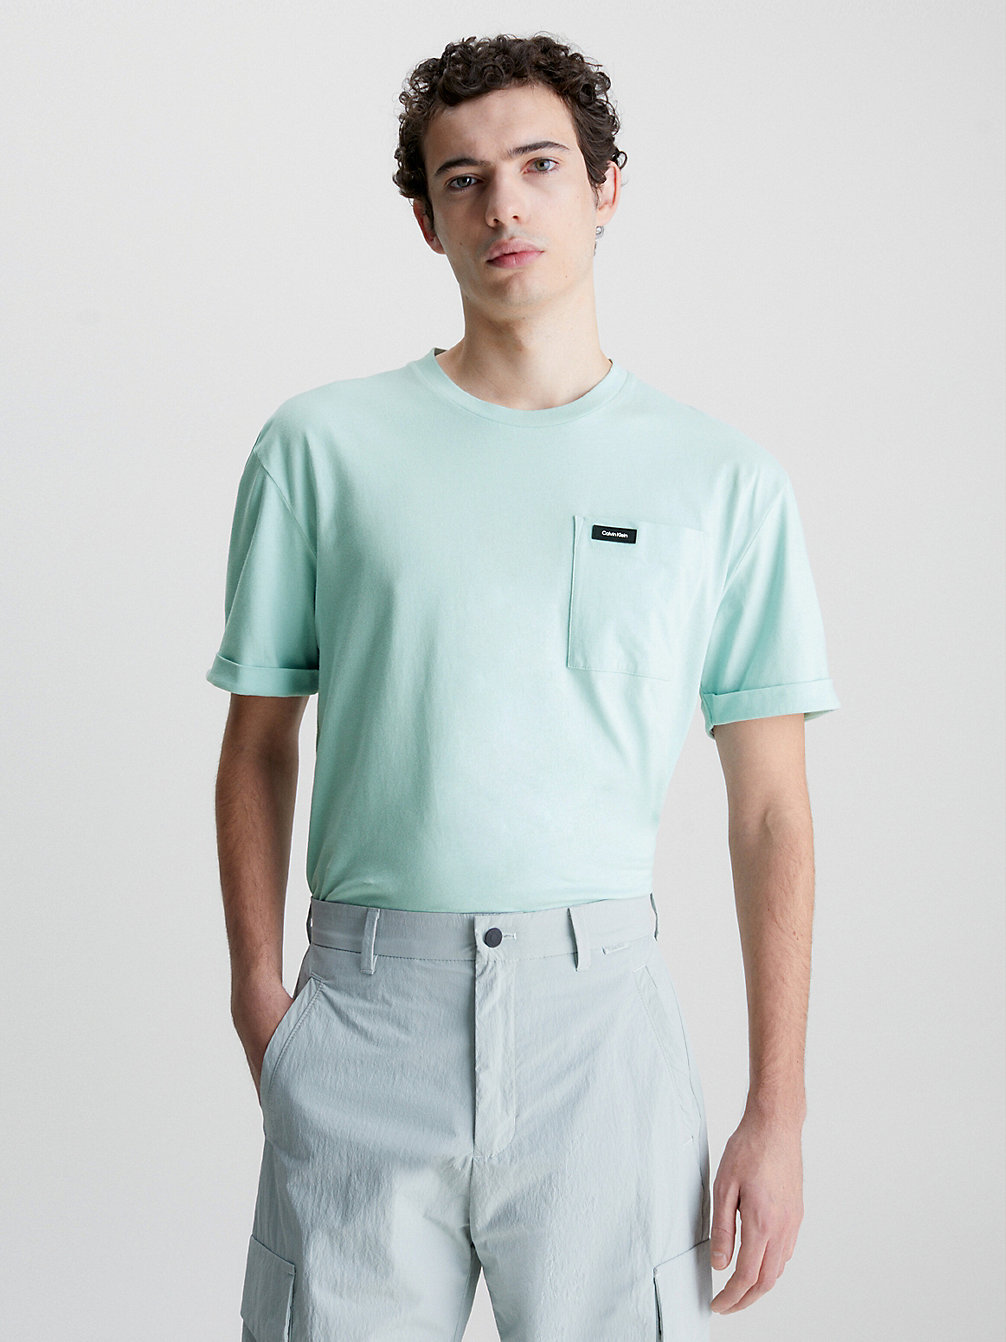 T-Shirt Con Tasca Taglio Relaxed > GHOST GLACIER > undefined uomo > Calvin Klein